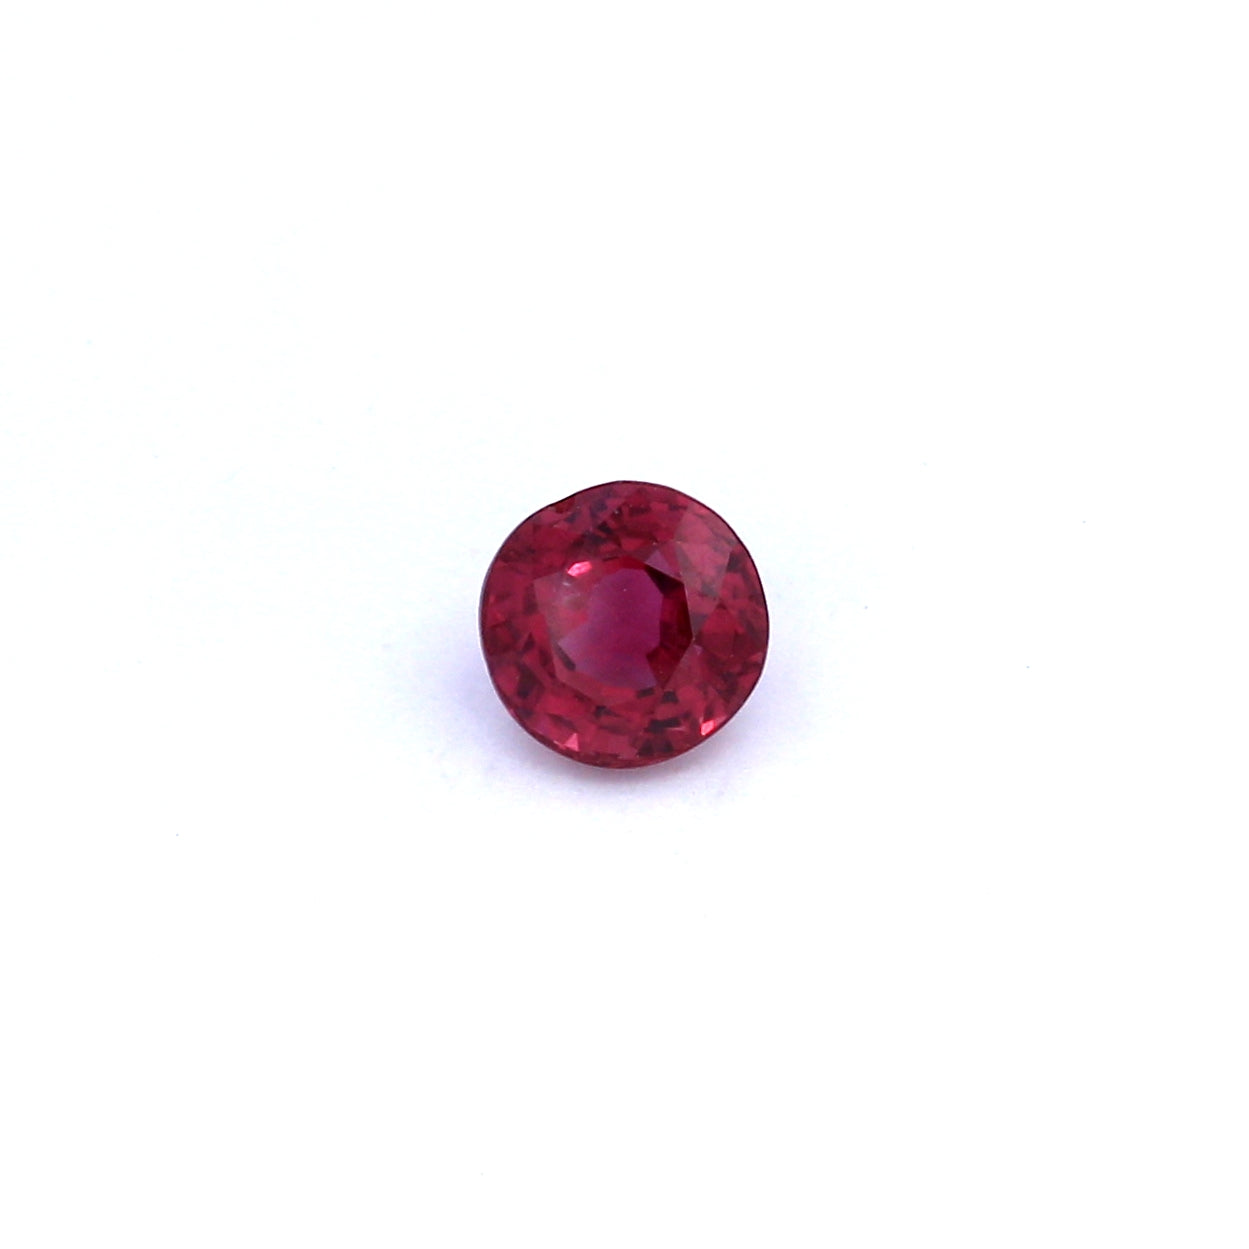 0.81ct Purplish Red, Round Ruby, H(a), Thailand - 5.01 - 5.11 x 3.54mm